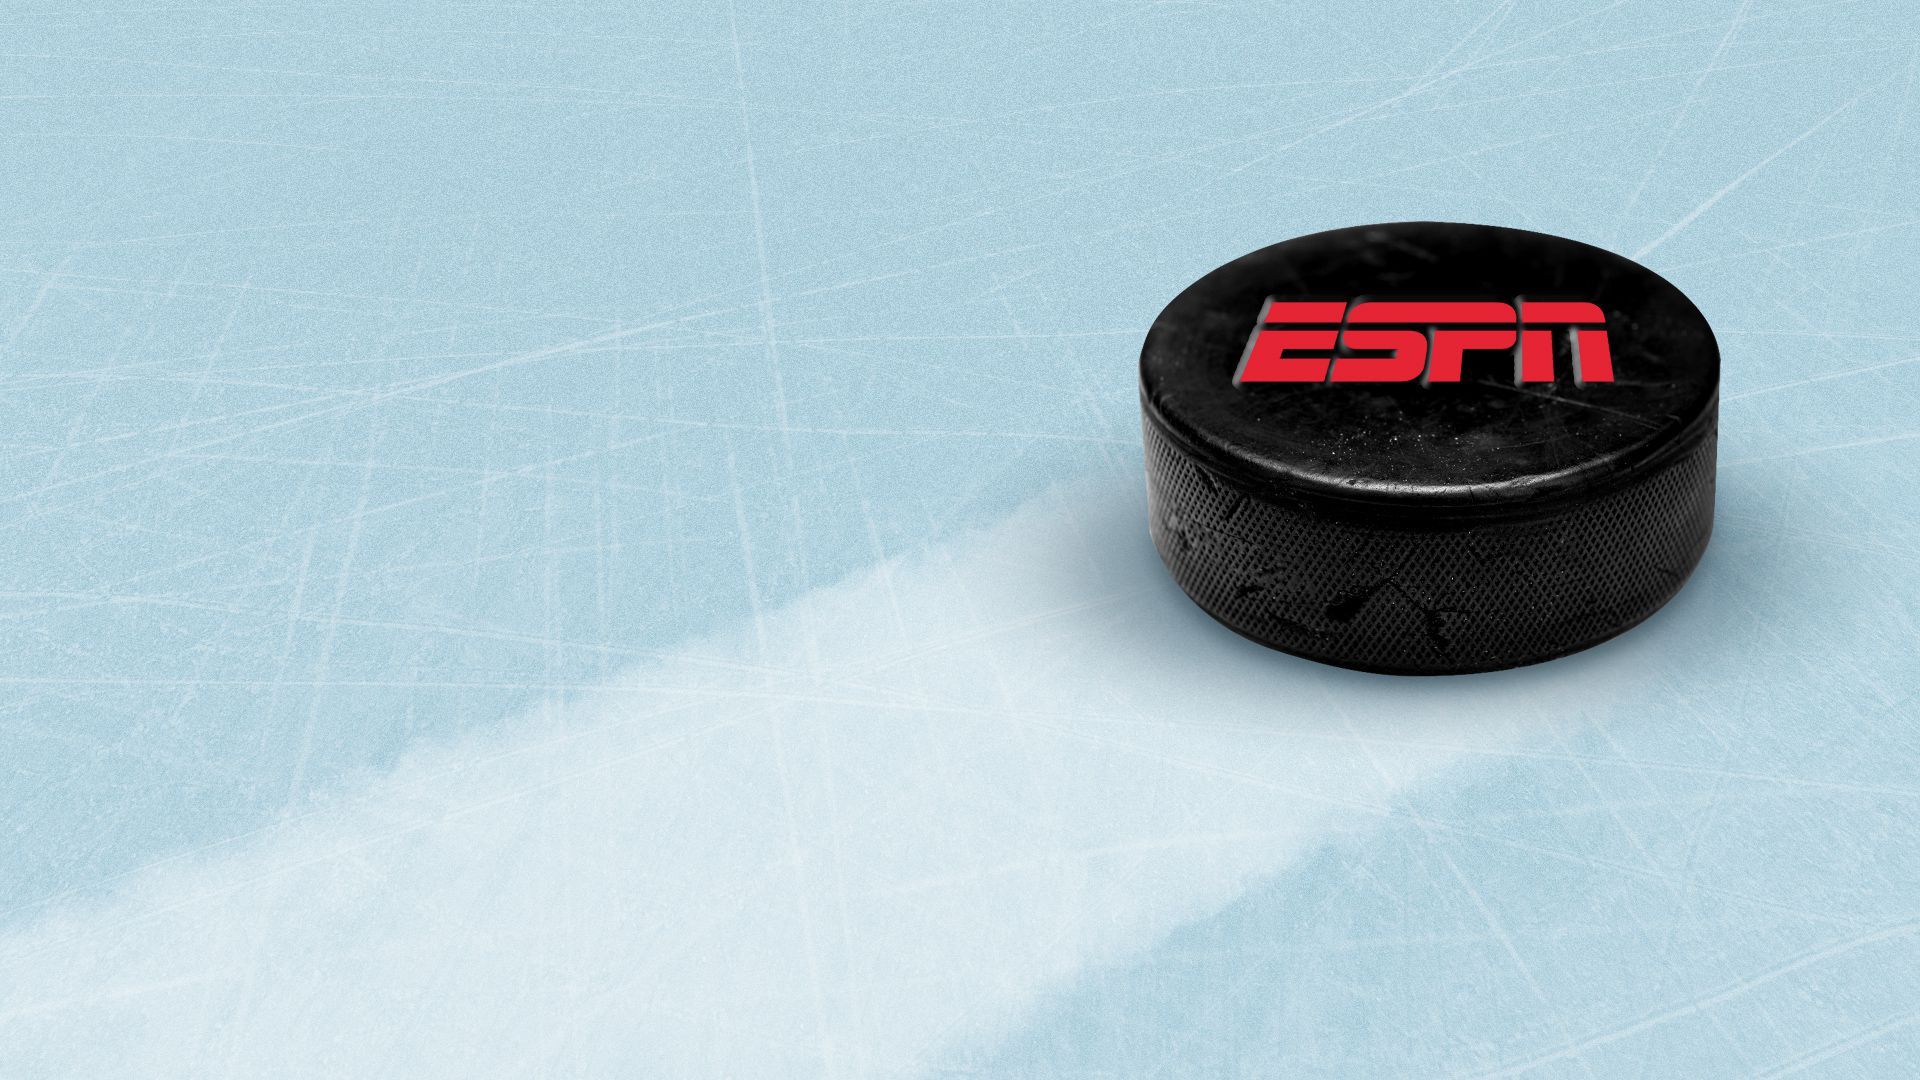 ESPN NHL ratings up big from last season